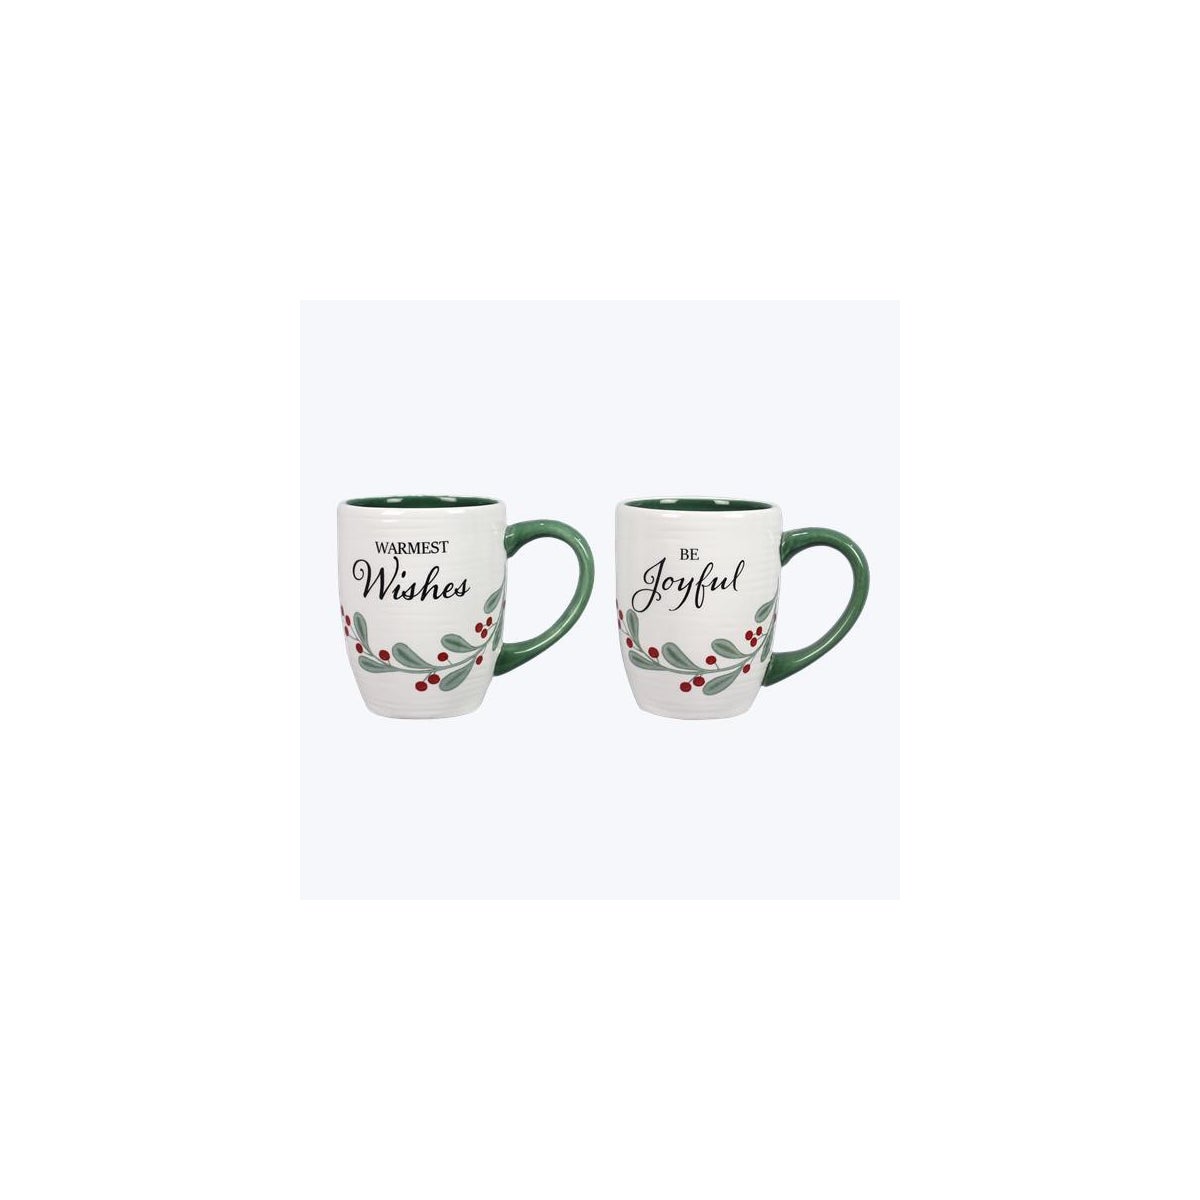 Ceramic Mugs, Warmest Wishes & Be Joyful 2 Ast